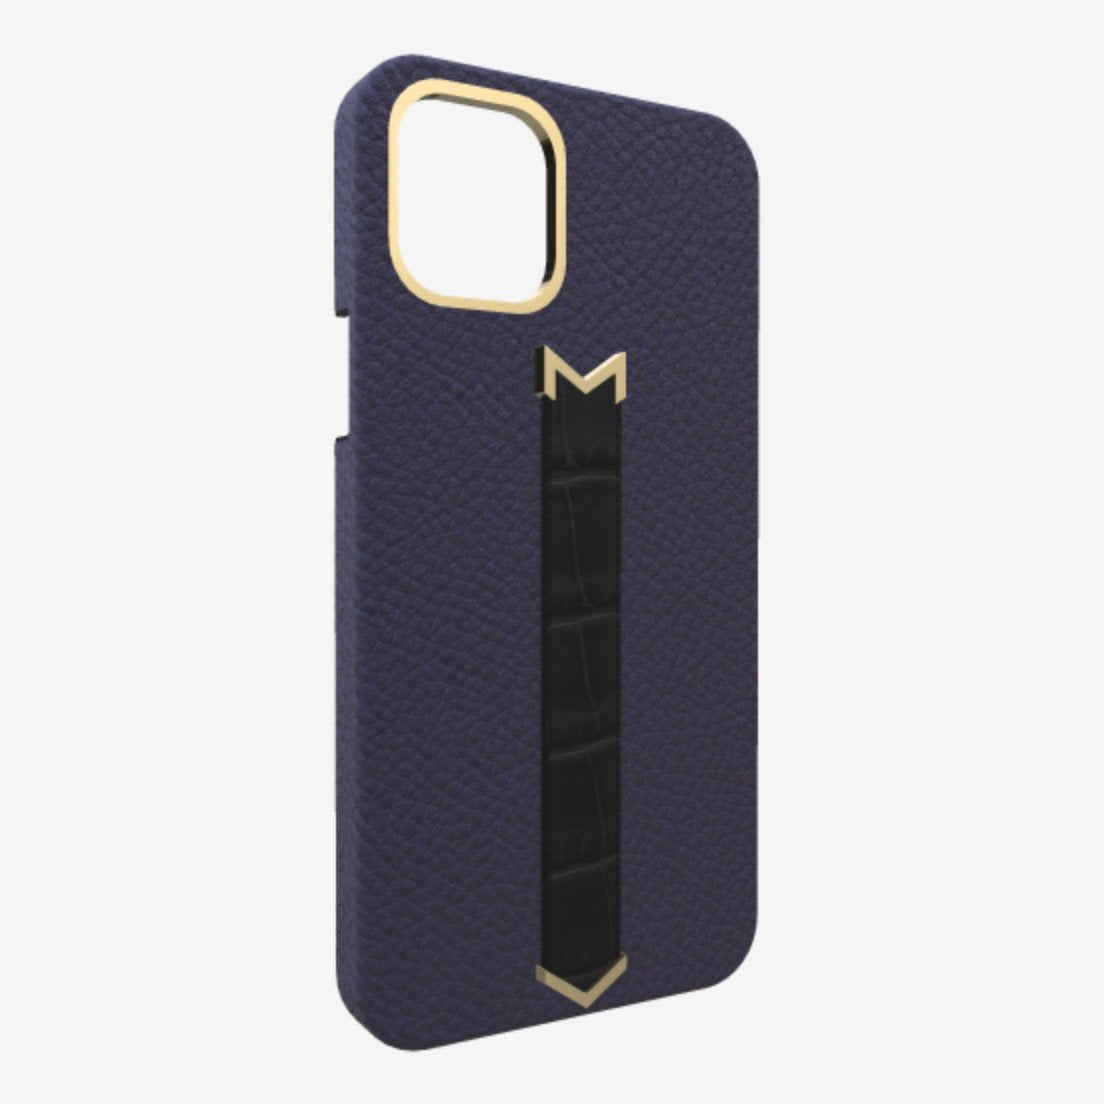 Gold Finger Strap Case for iPhone 13 Pro Max in Genuine Calfskin and Alligator Navy Blue Bond Black 